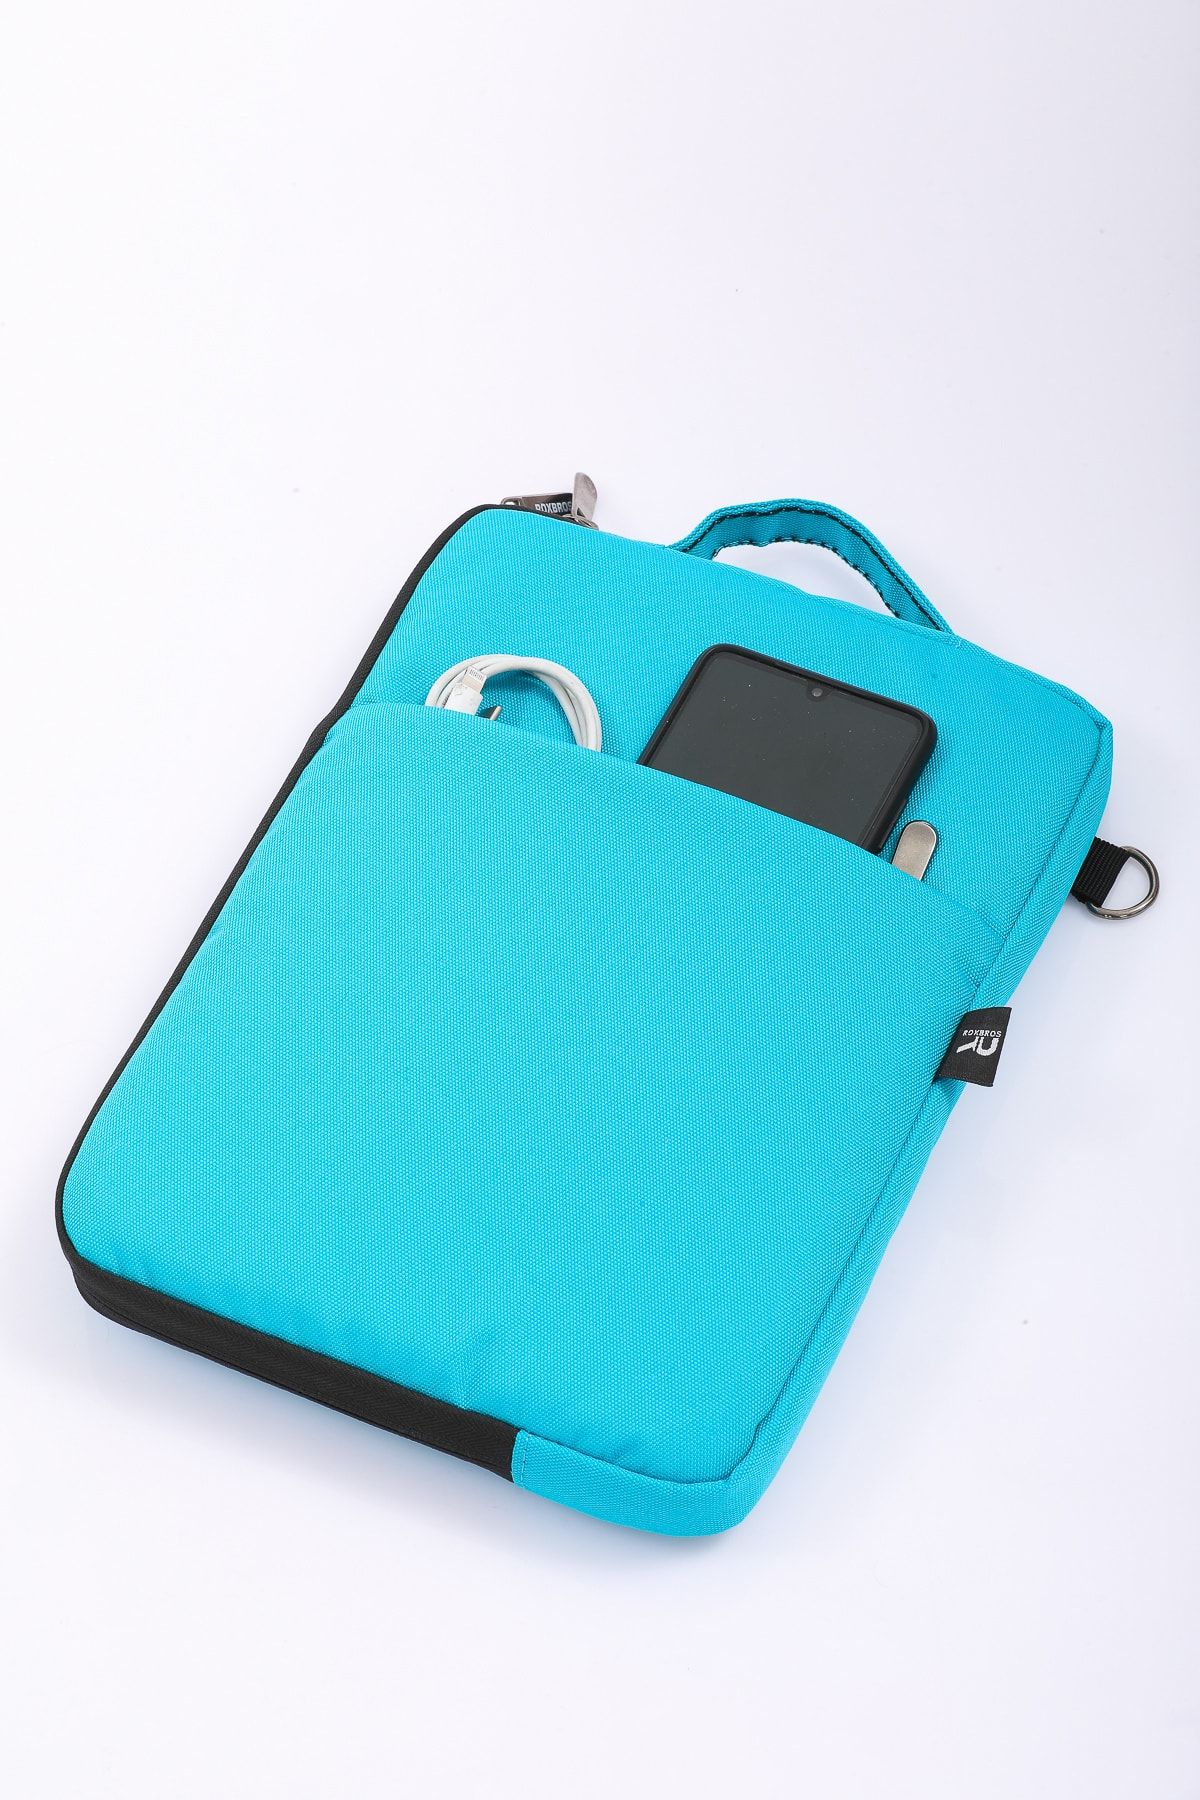 Amazon.com: Handbag Case for iPad 10.2